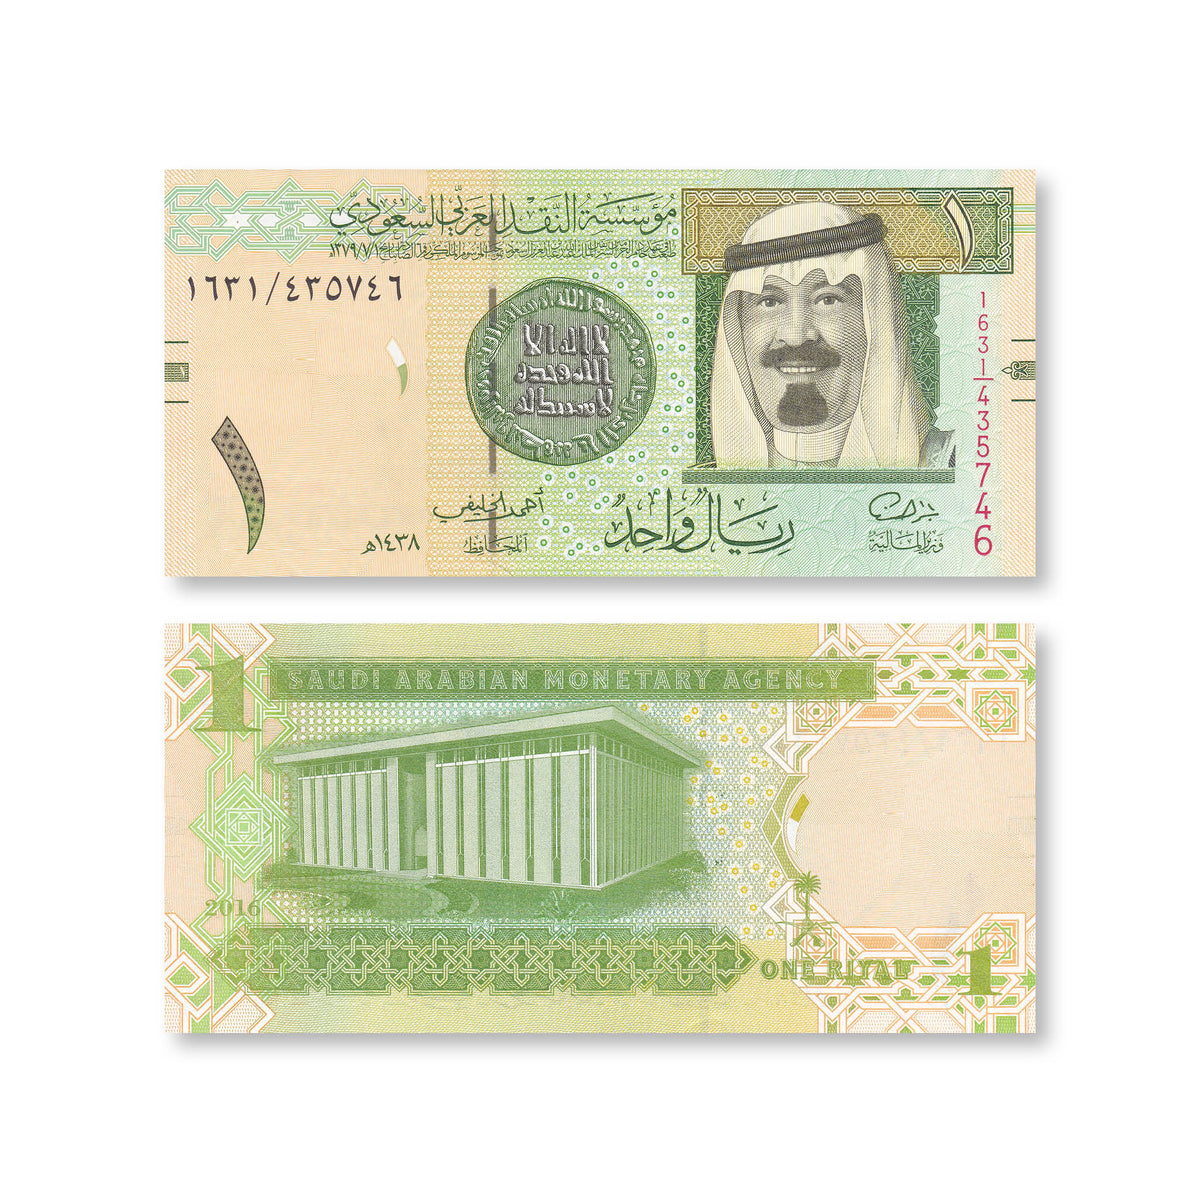 Saudi Arabia 1 Riyal, 2016, B130d, P31d, UNC - Robert's World Money - World Banknotes